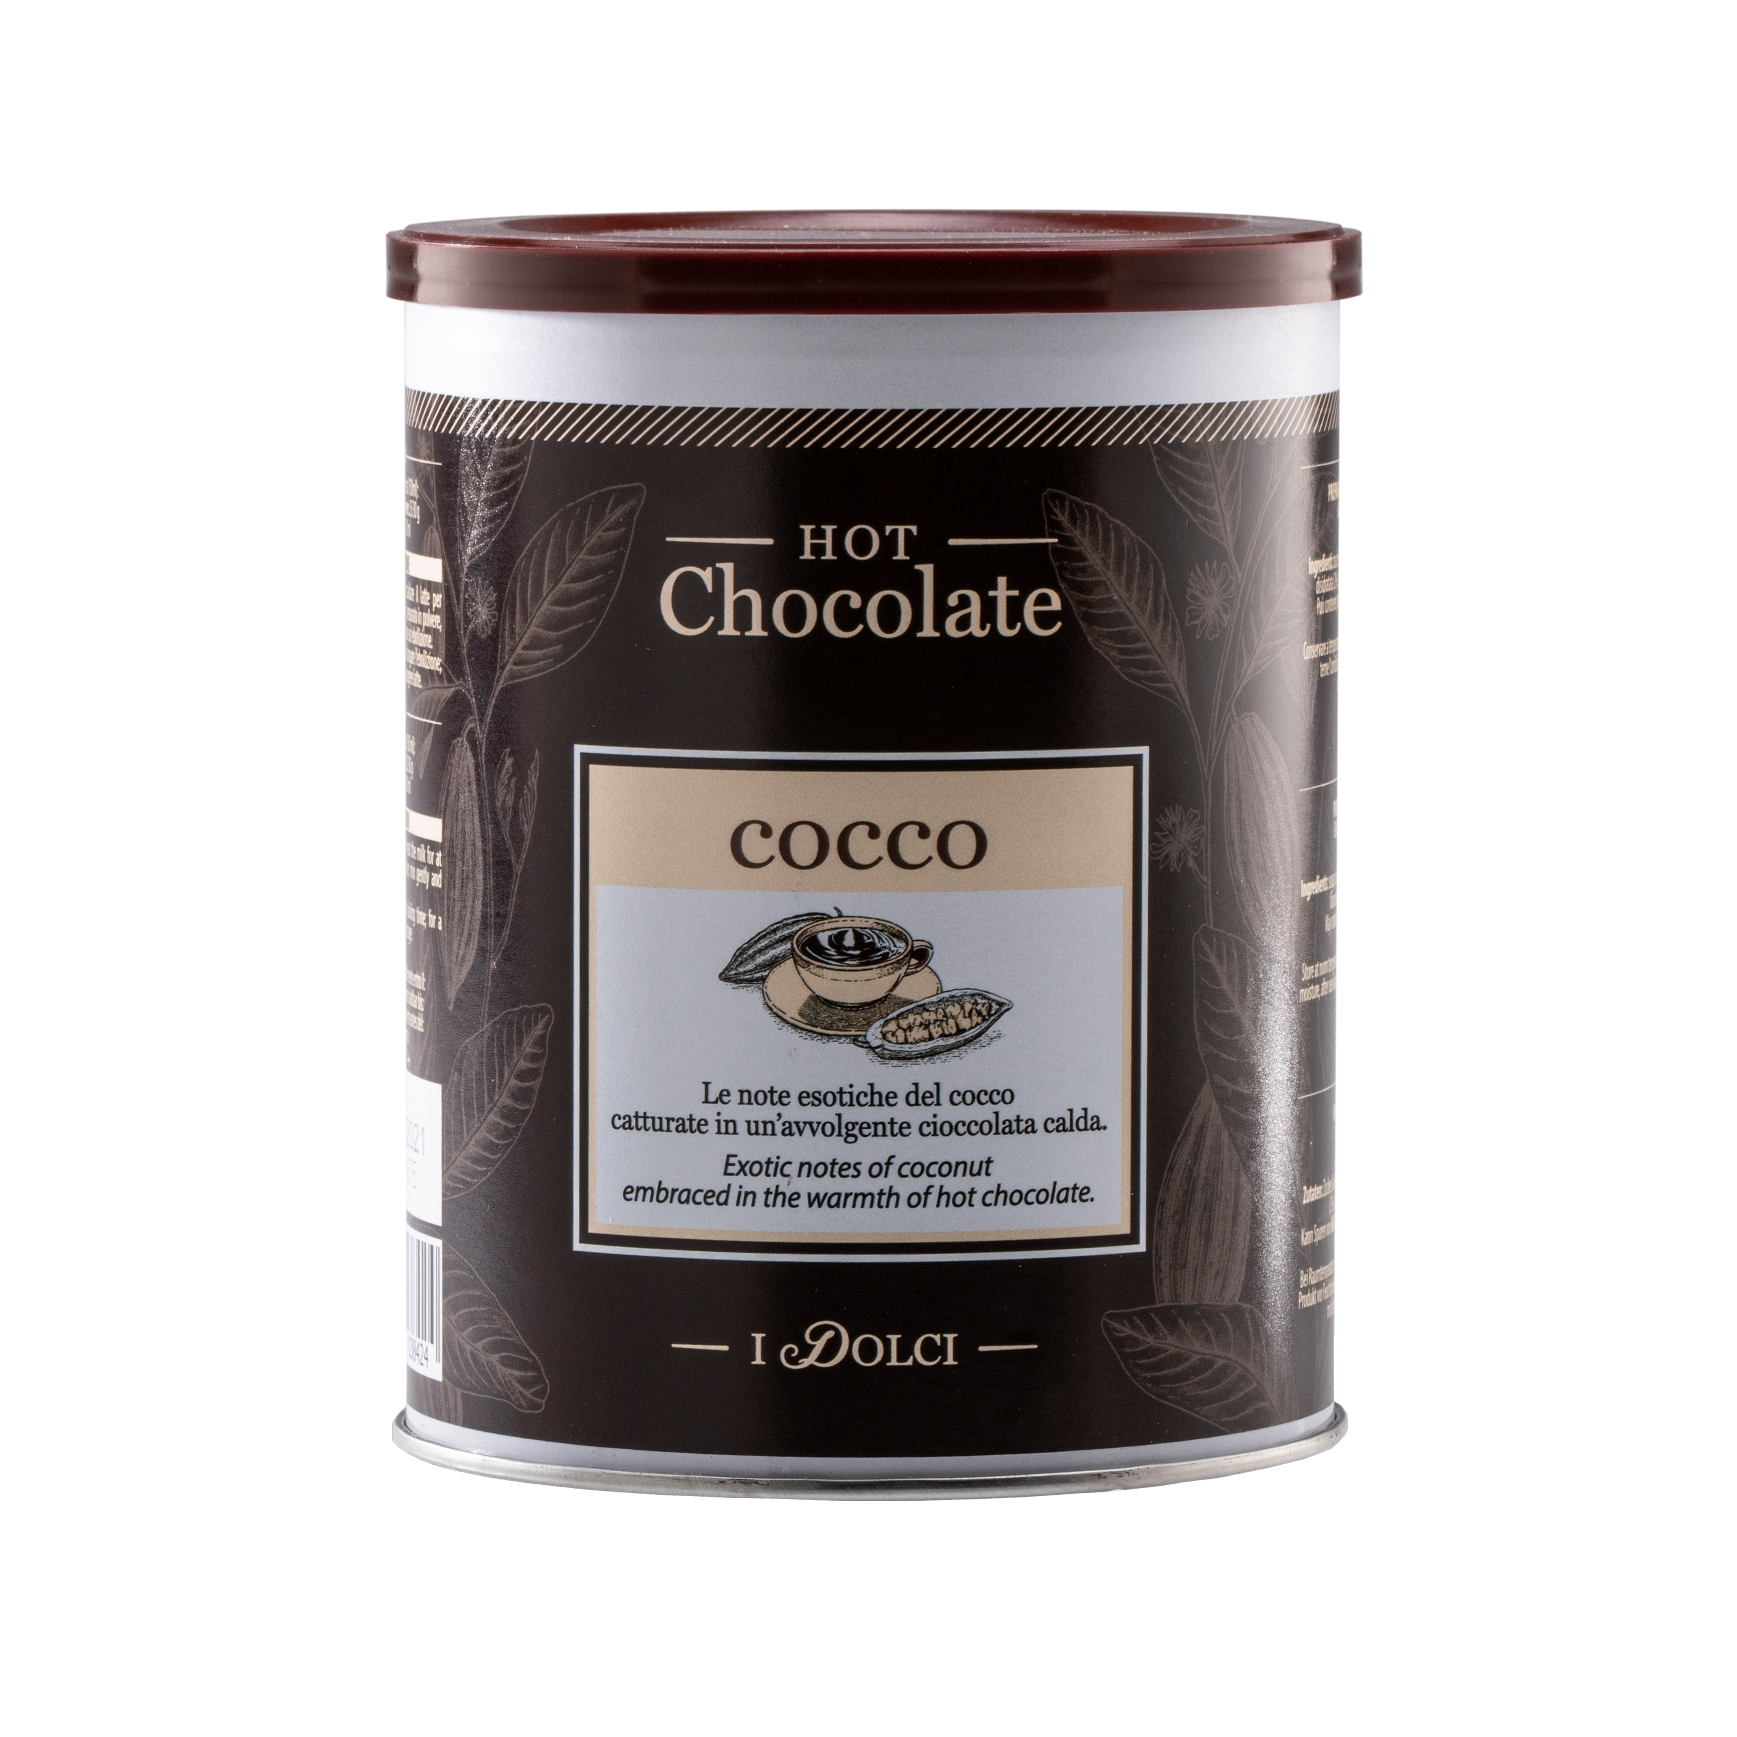 Горячий шоколад Diemme Caffe Coconut Chocolate 500 г горячий шоколад diemme caffe coconut chocolate 500 г